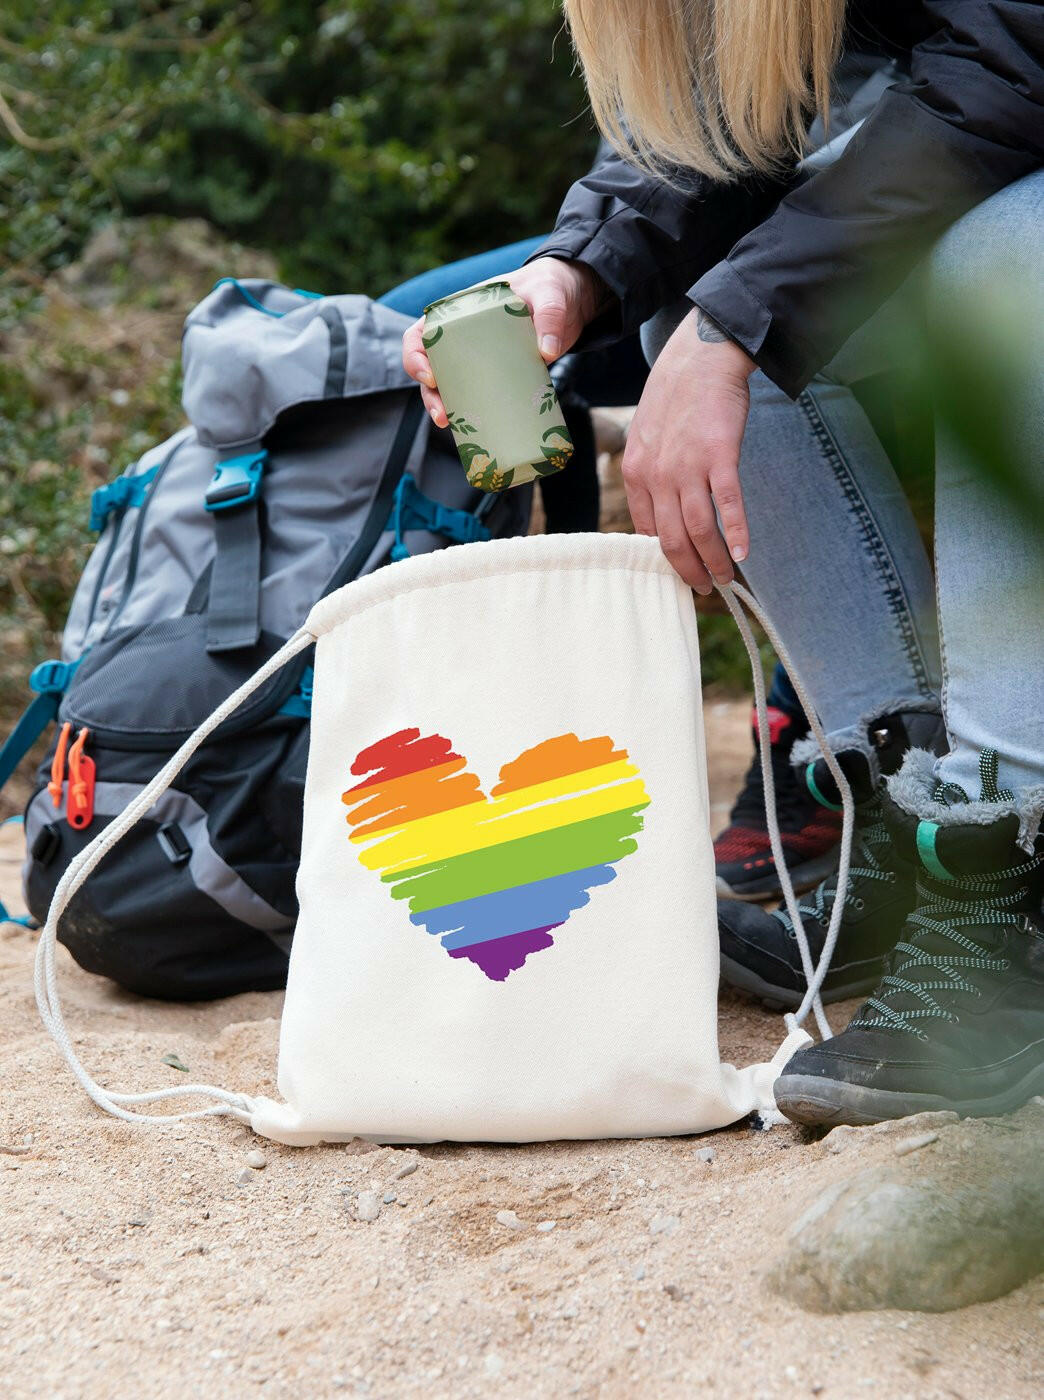 Bild: Turnbeutel - LGBT Regenbogen Herz Geschenkidee